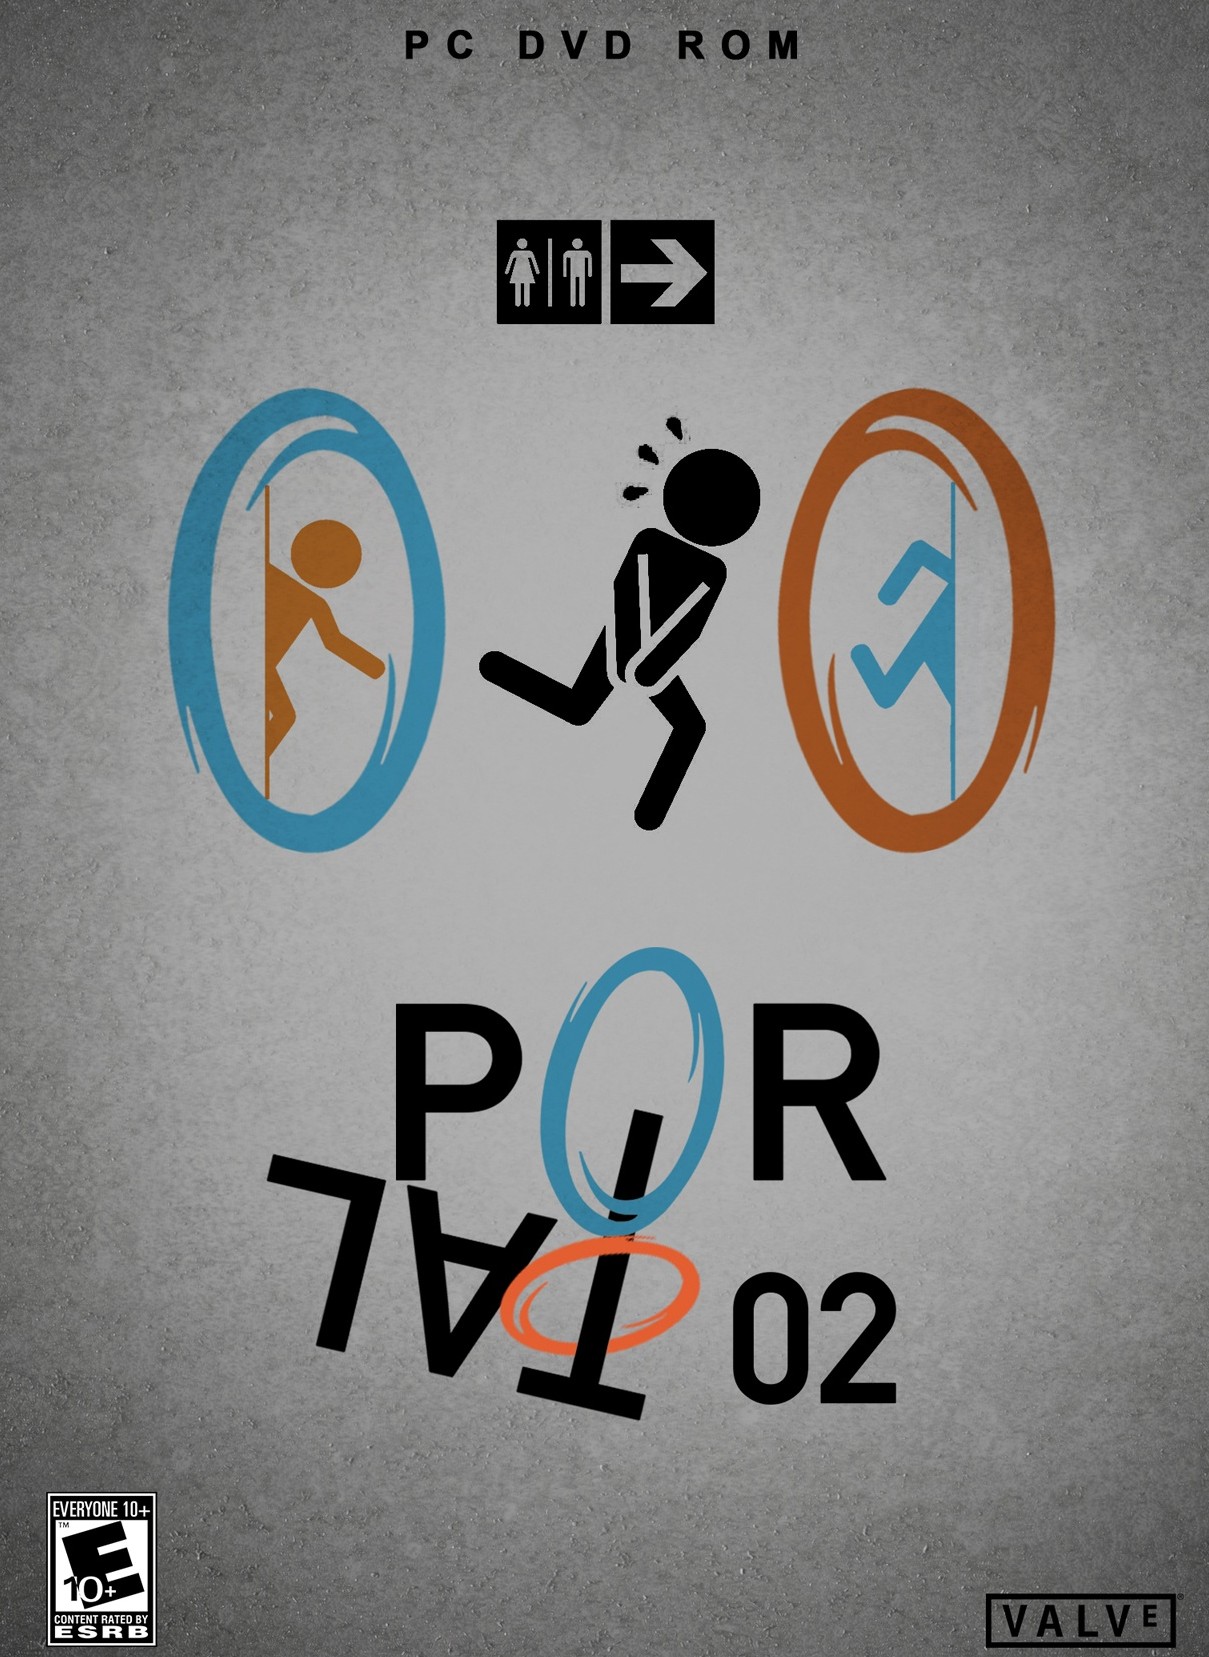 'Portal 2'